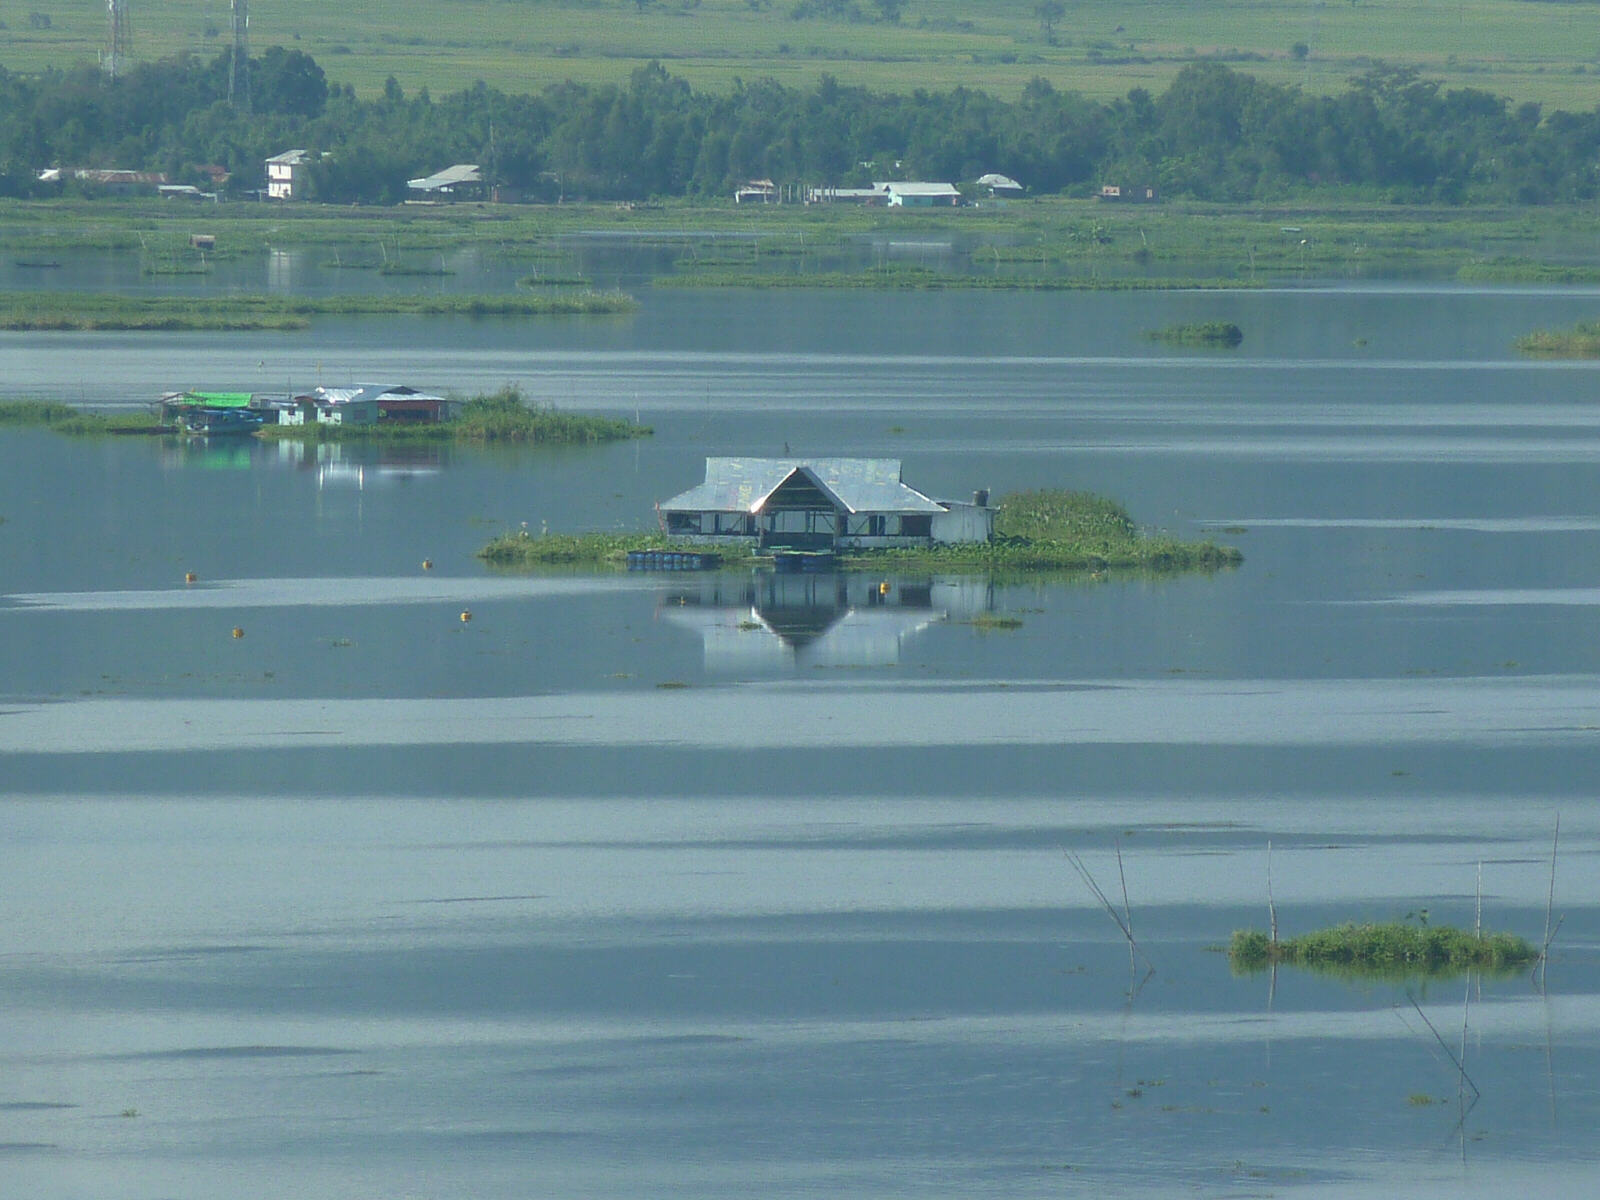 Floating islands in Loktak lake, Manipur state